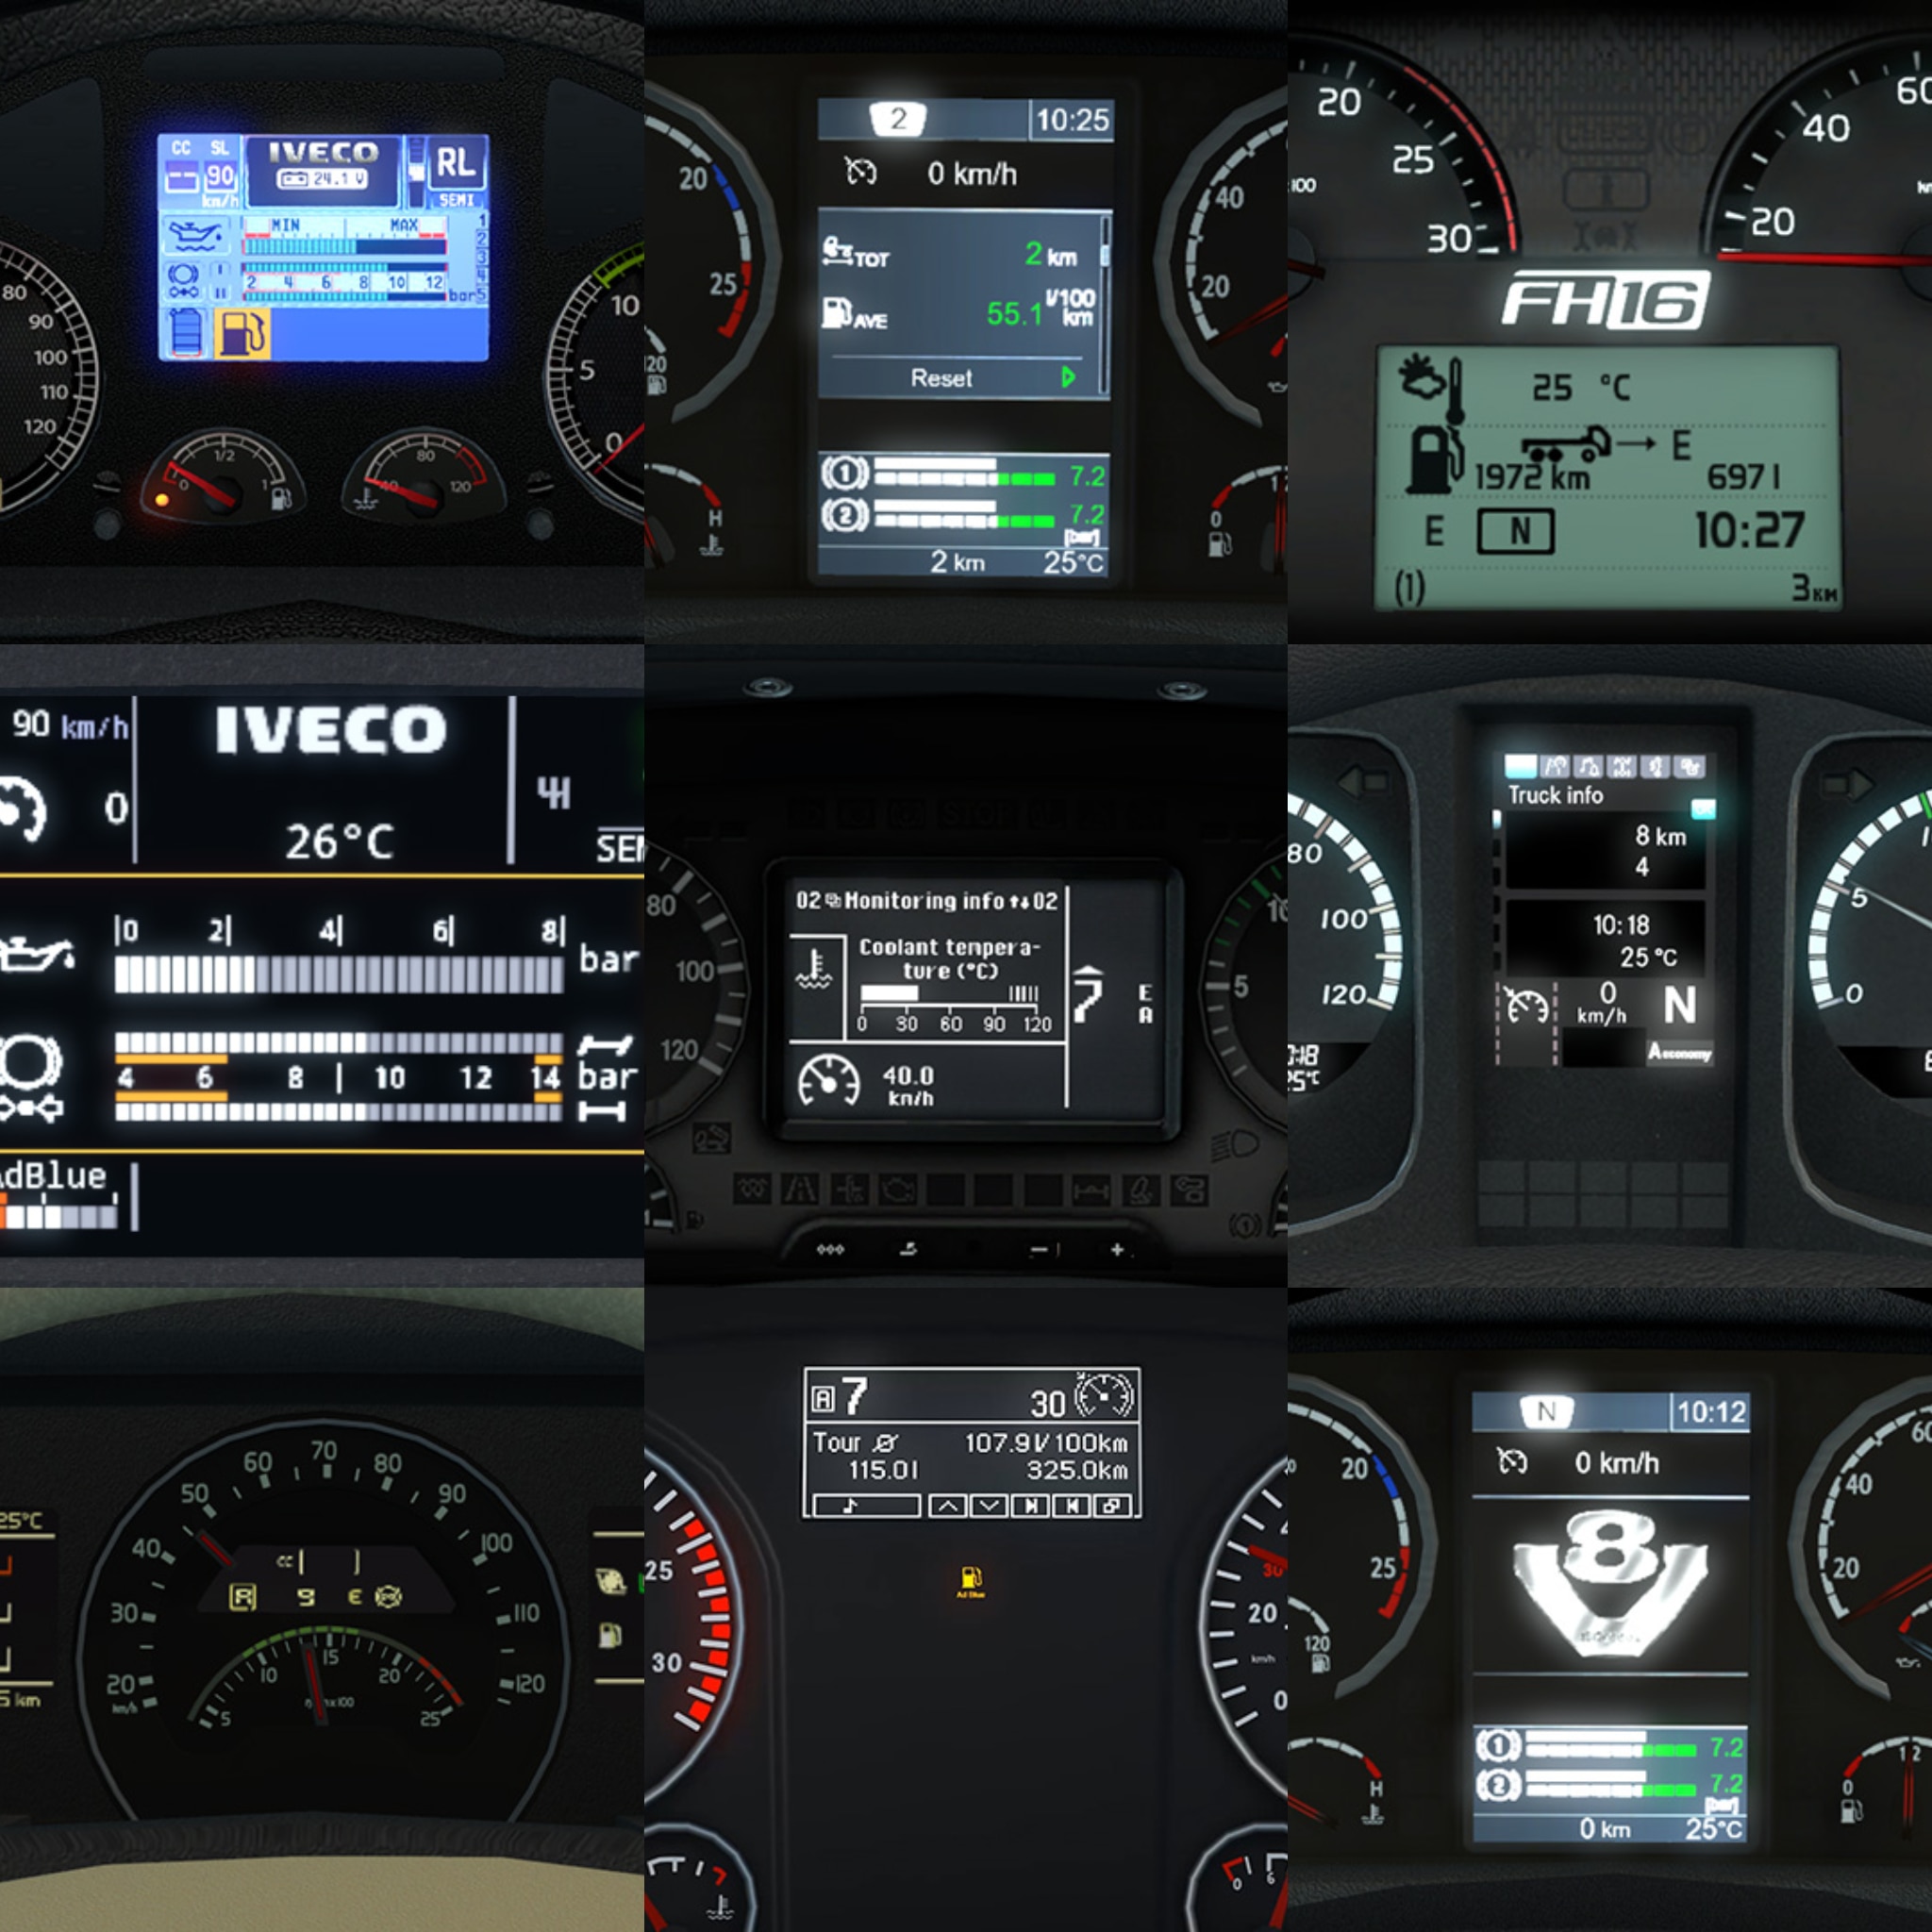 Euro Truck Simulator 2 [72] with a custom cockpit simulating sedan